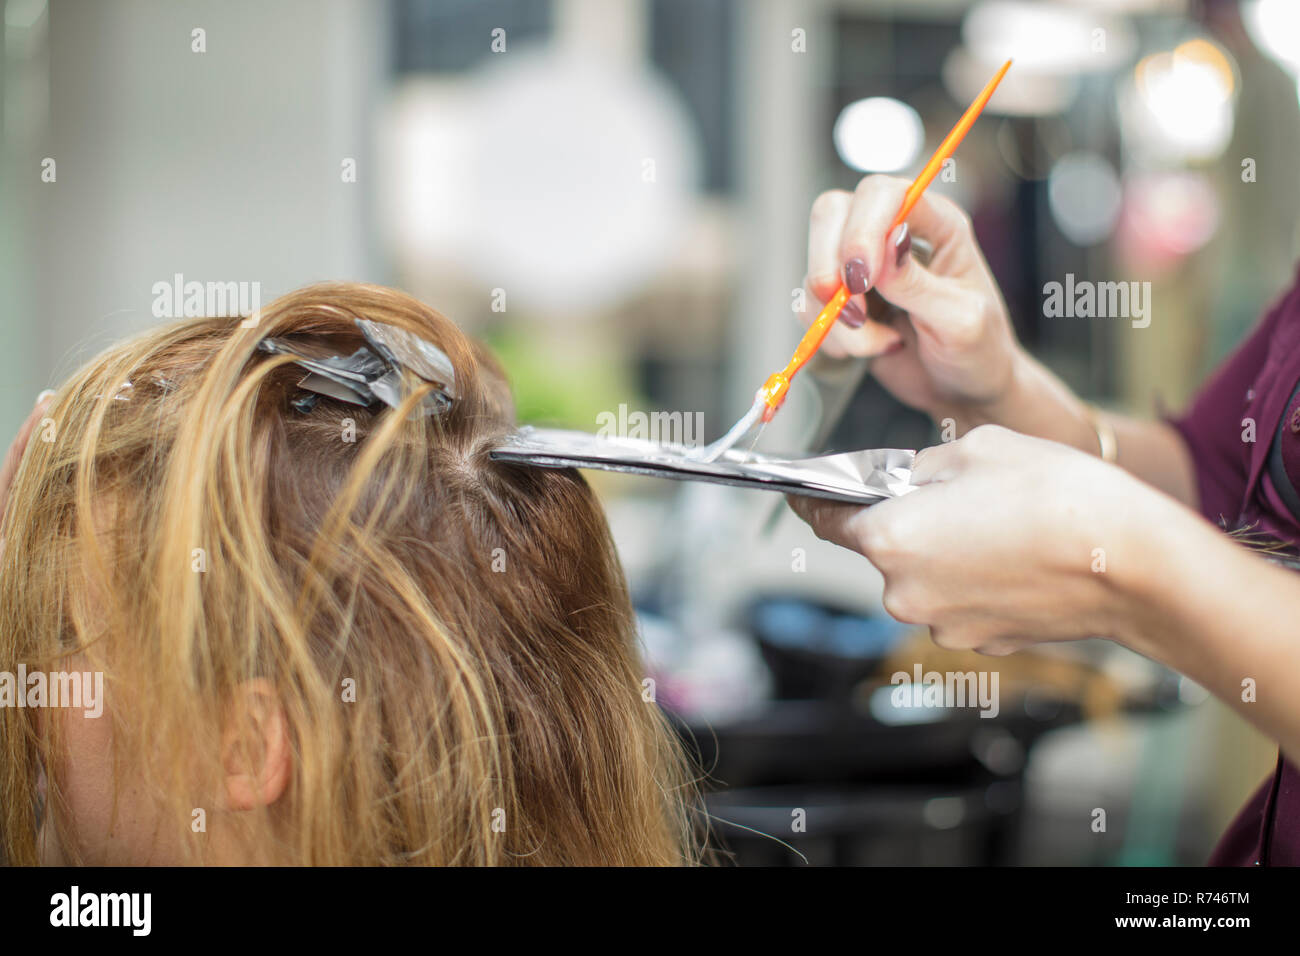 Hairdresser colouring customer's hair in salon Stock Photo